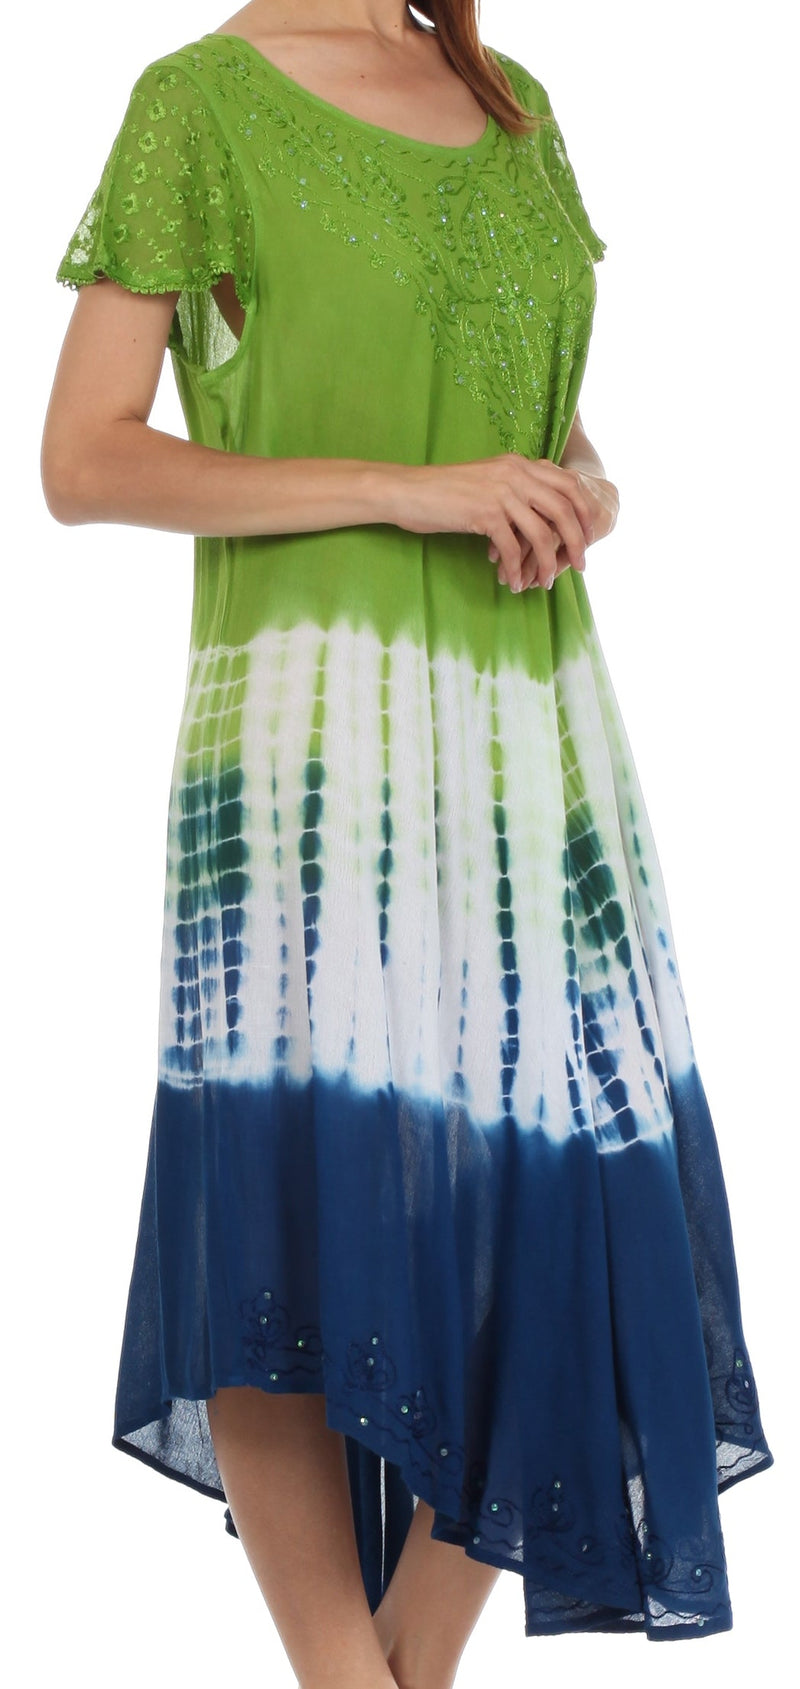 Sakkas Multi Color Tie Dye Cap Sleeve Caftan Dress / Cover Up